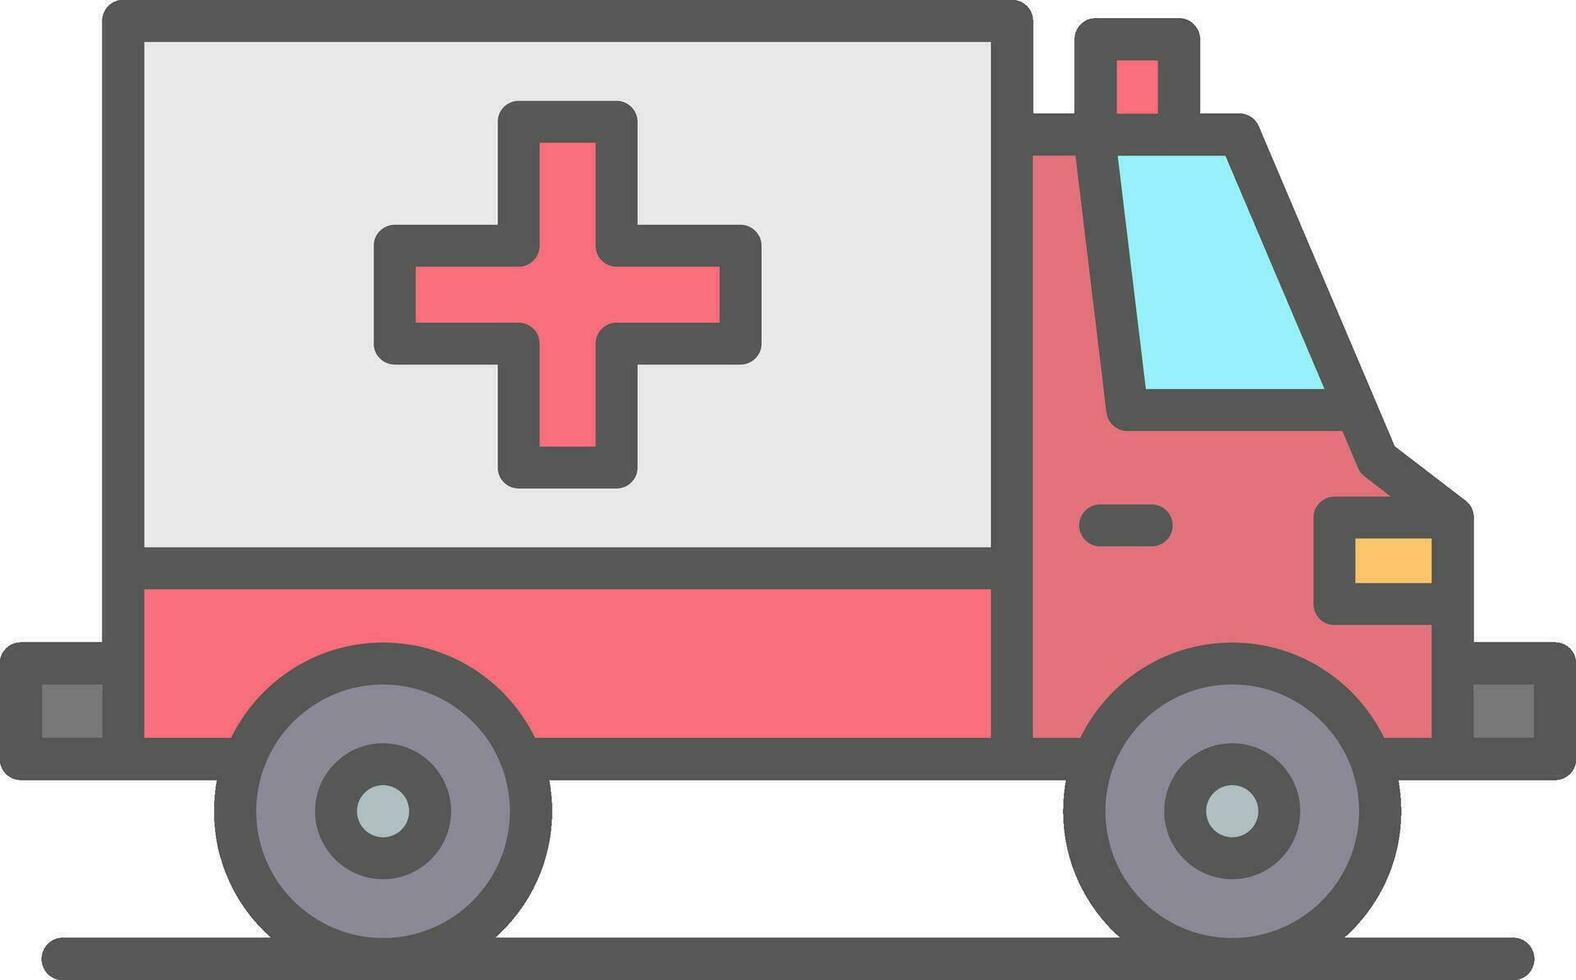 design de ícone de vetor de ambulância